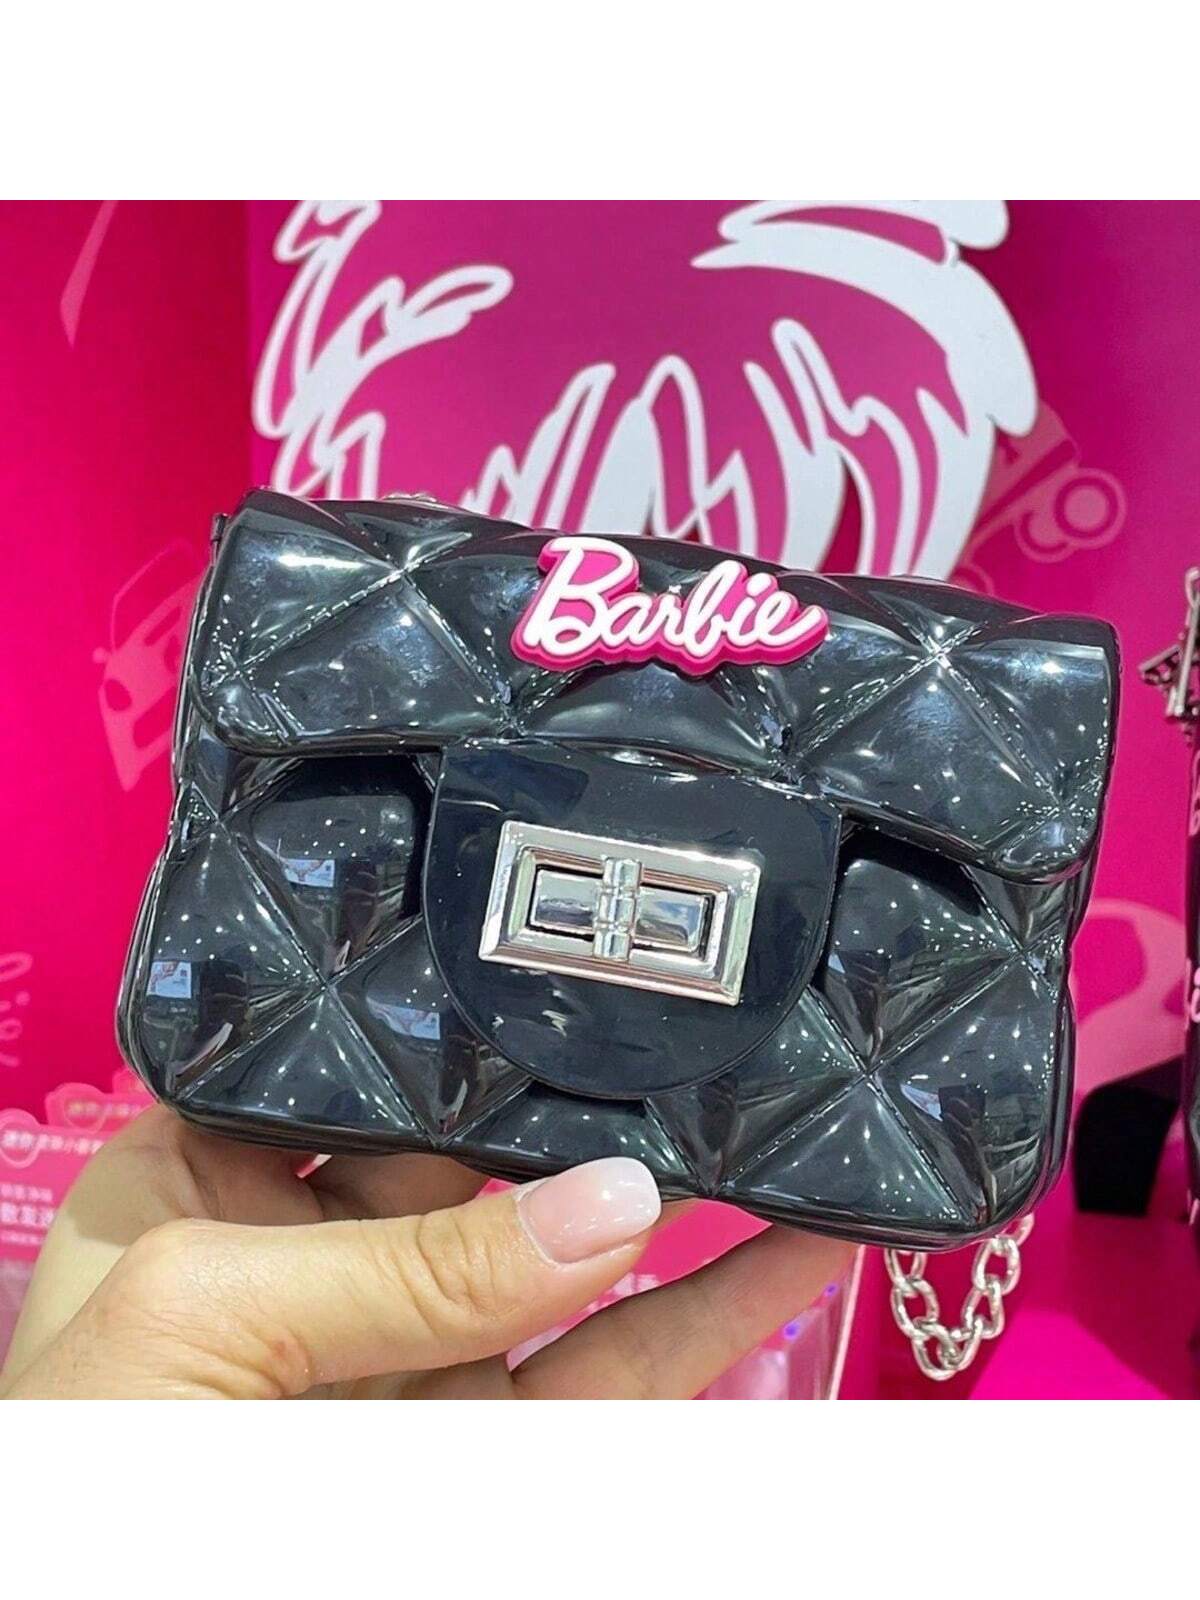 Miniso Barbie Series, черный мини сумка через плечо shu рипстоп черная